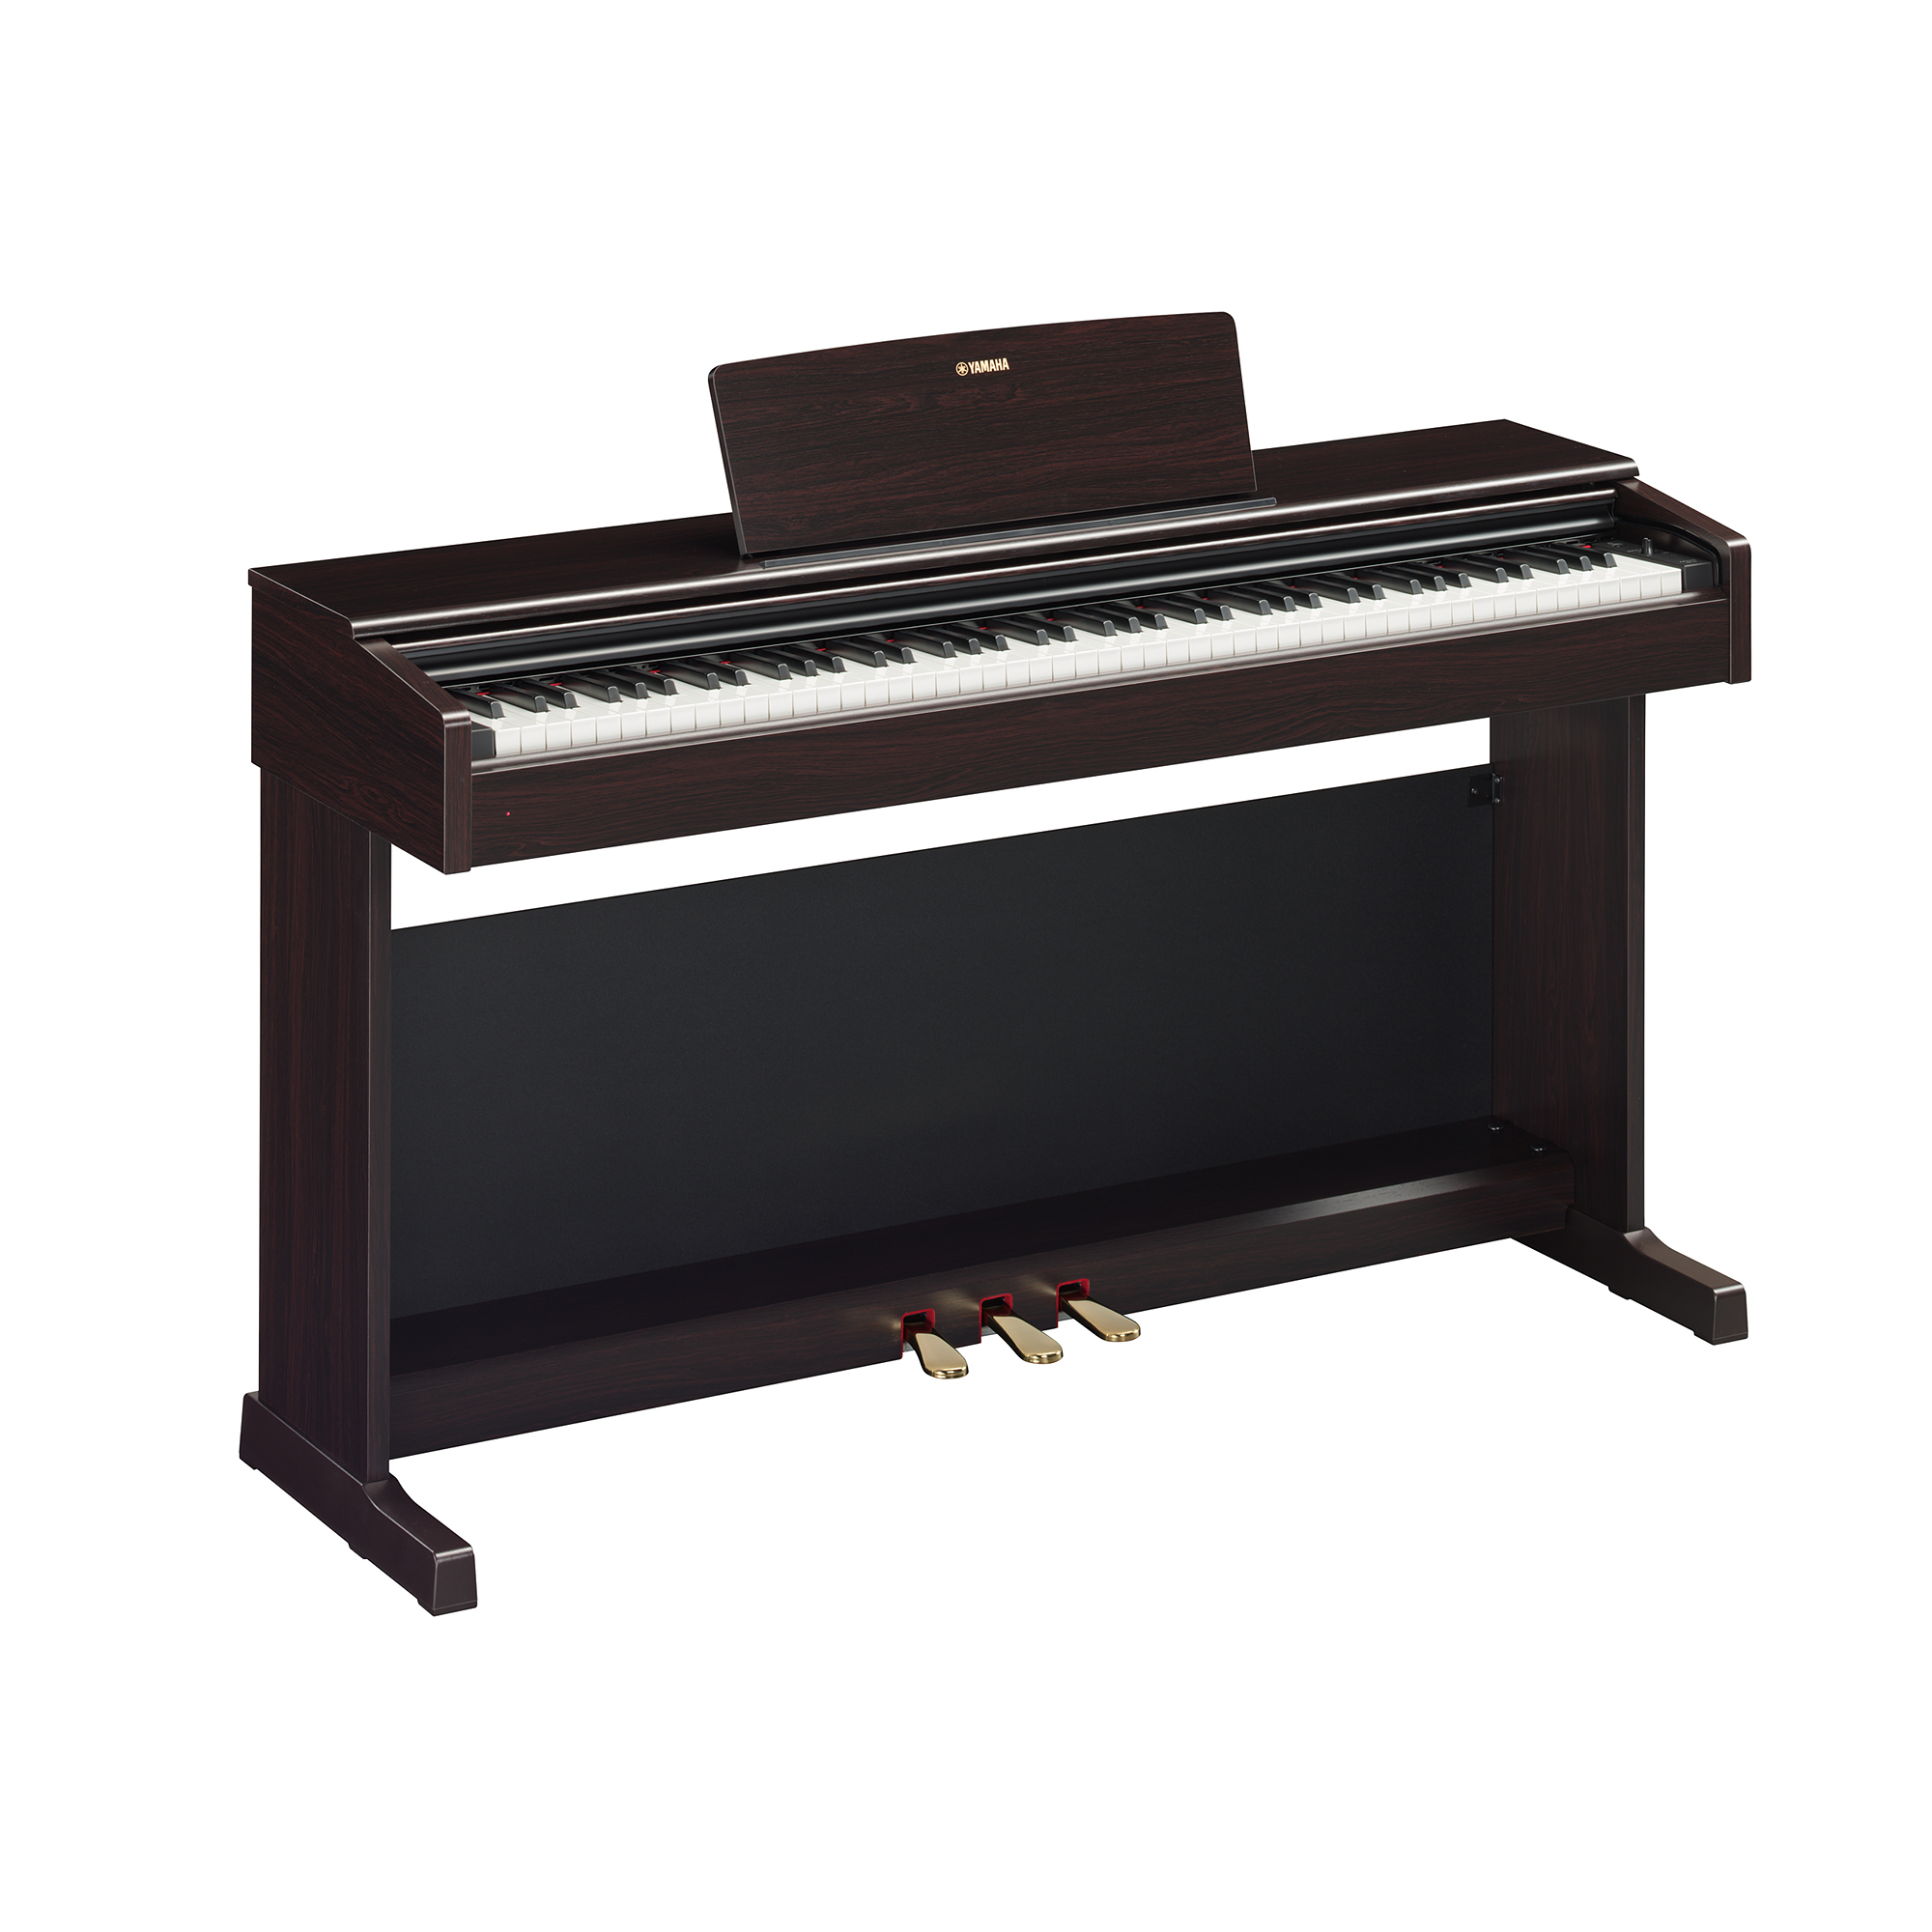 Yamaha Ydp144 Digital Piano - Rosewood